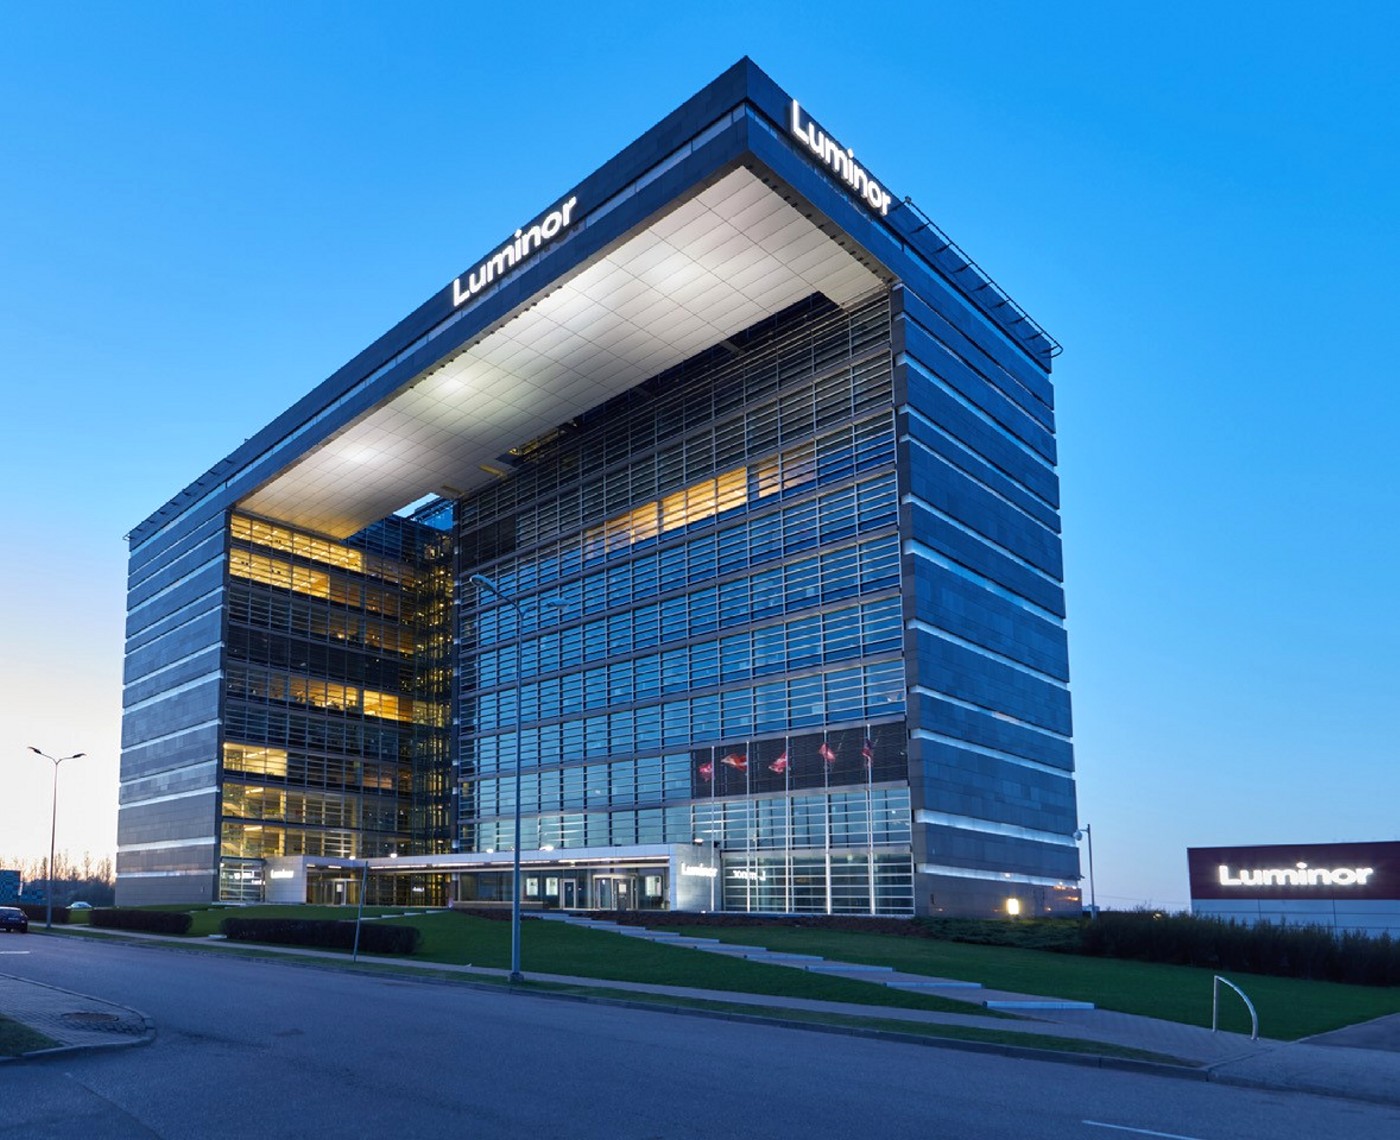 Colonna приобрела штаб-квартиру банка Luminor в Риге